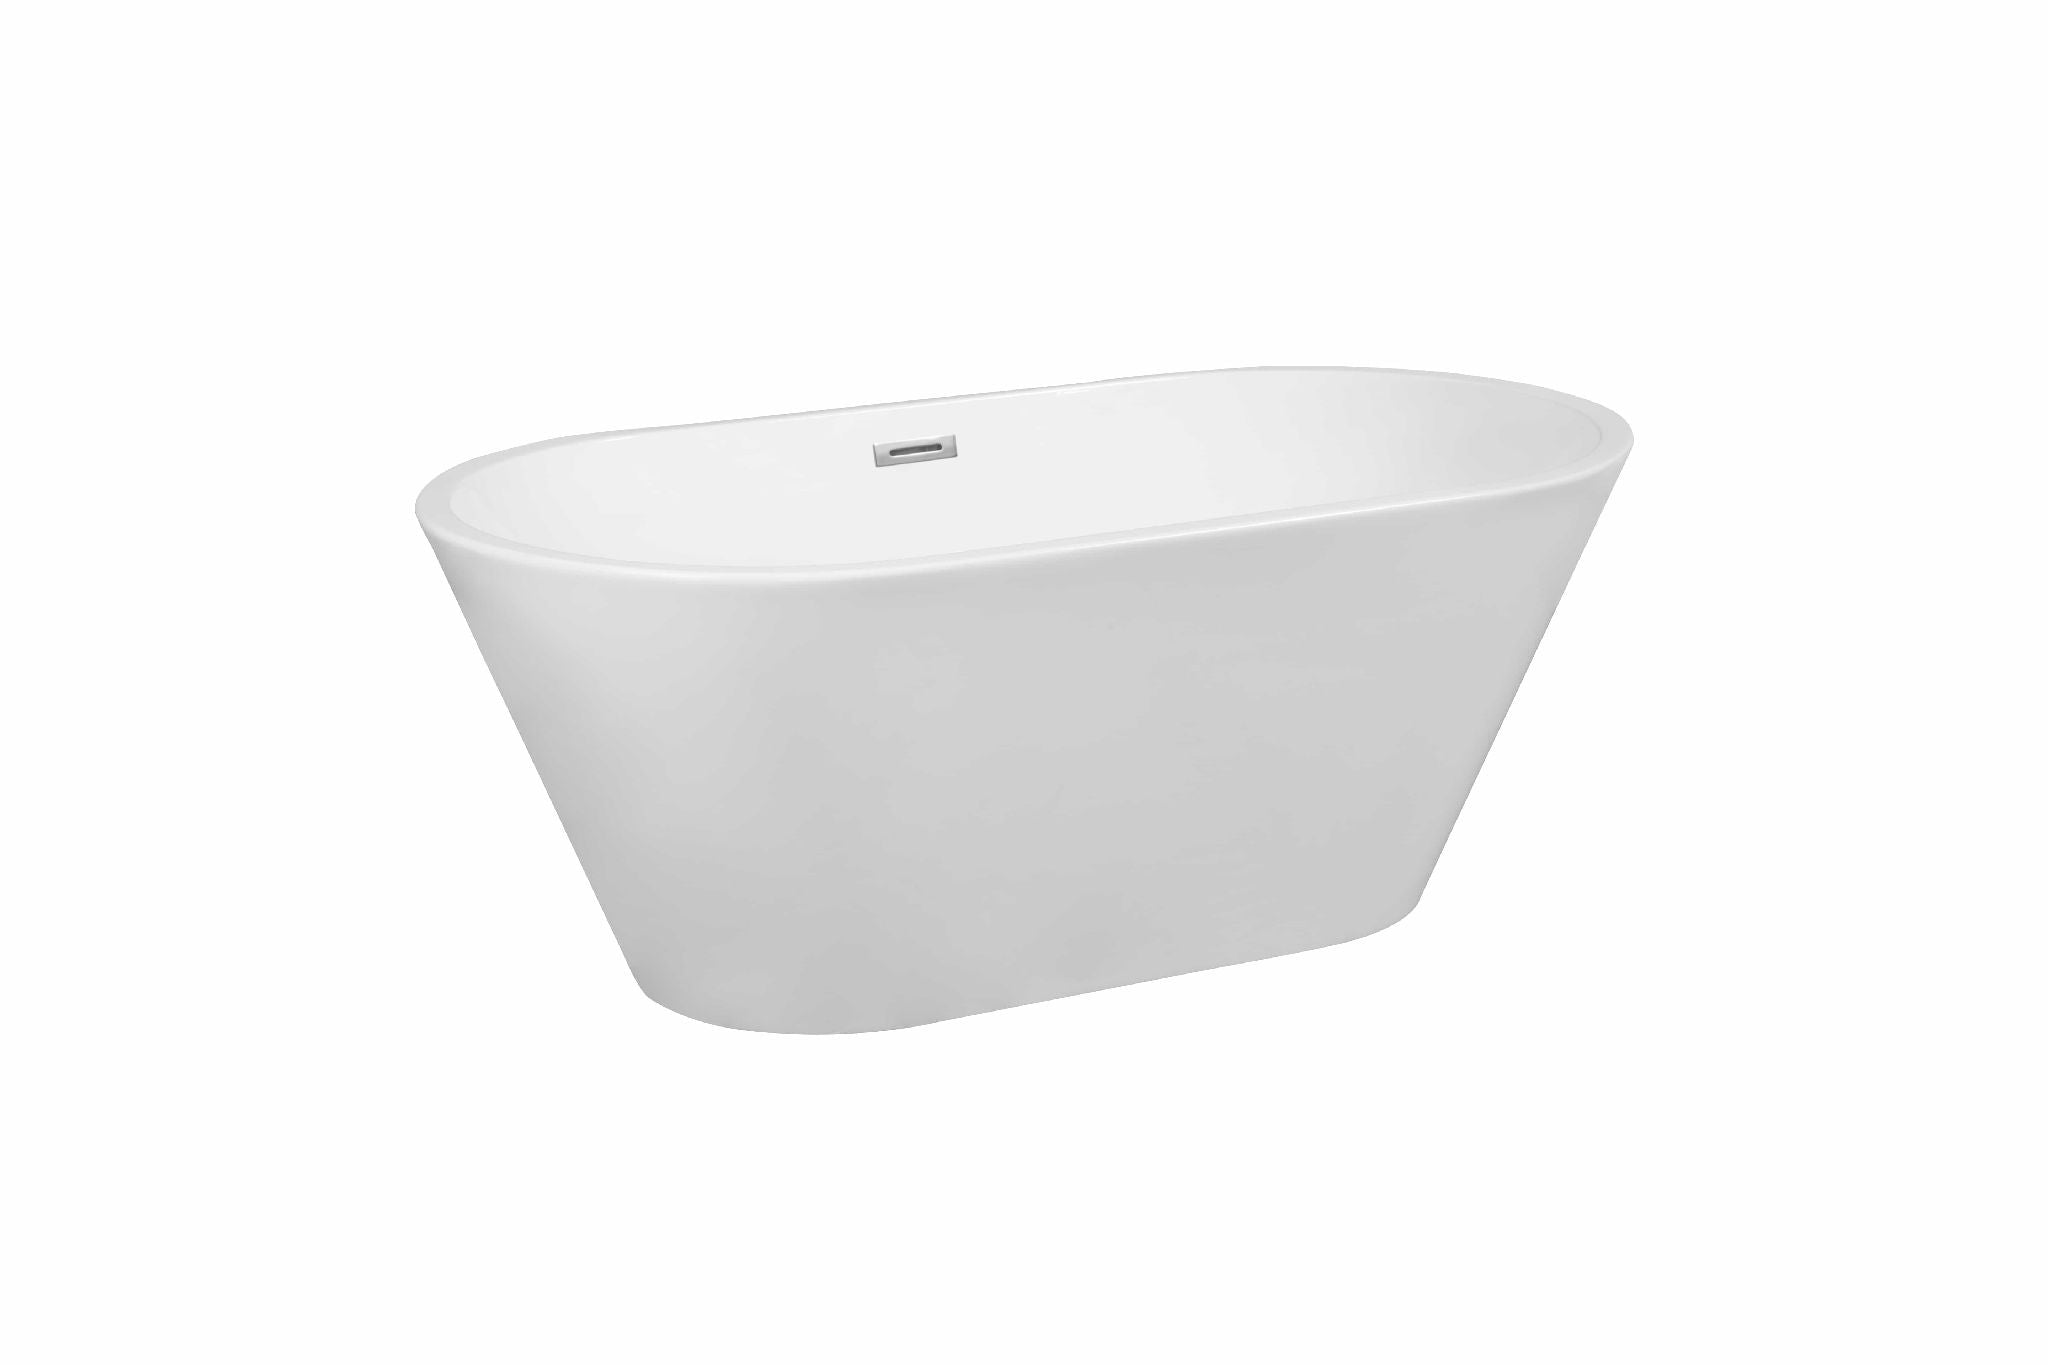 SkySea Bath Tub 59 White Acrylic Free Standing Soaker, Center Drain And Overflow